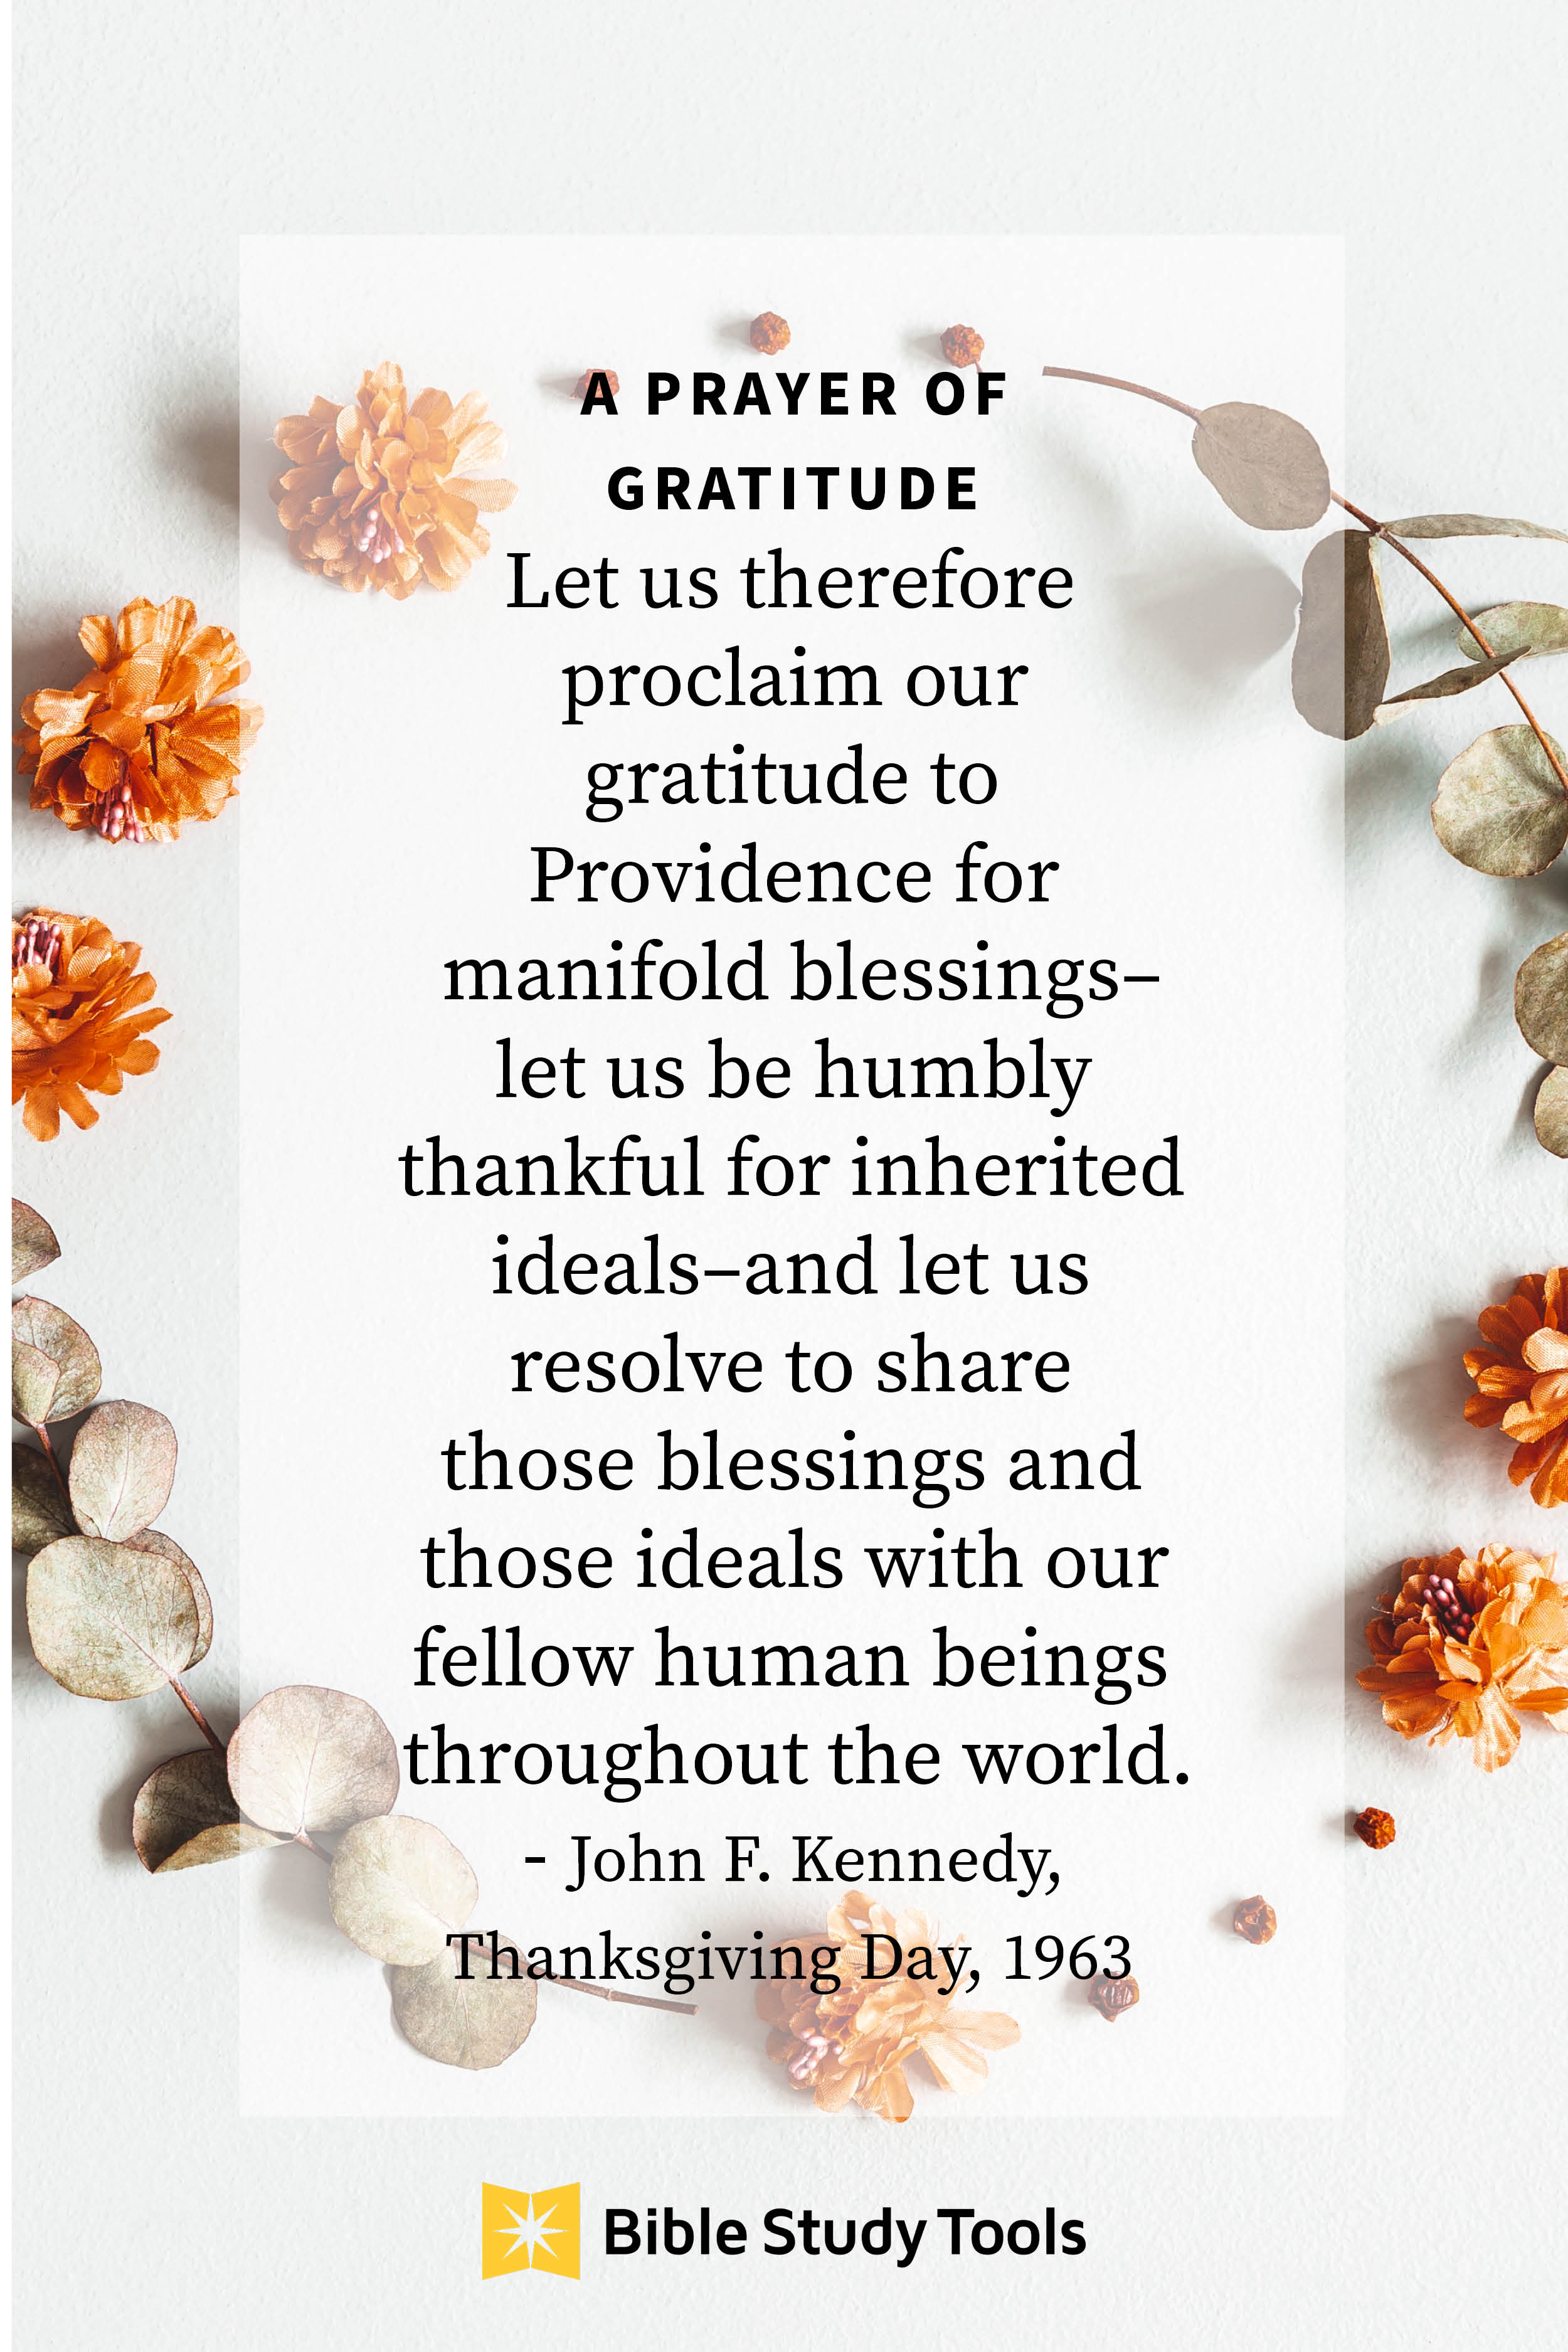 A Thanksgiving Prayer by John F Kennedy